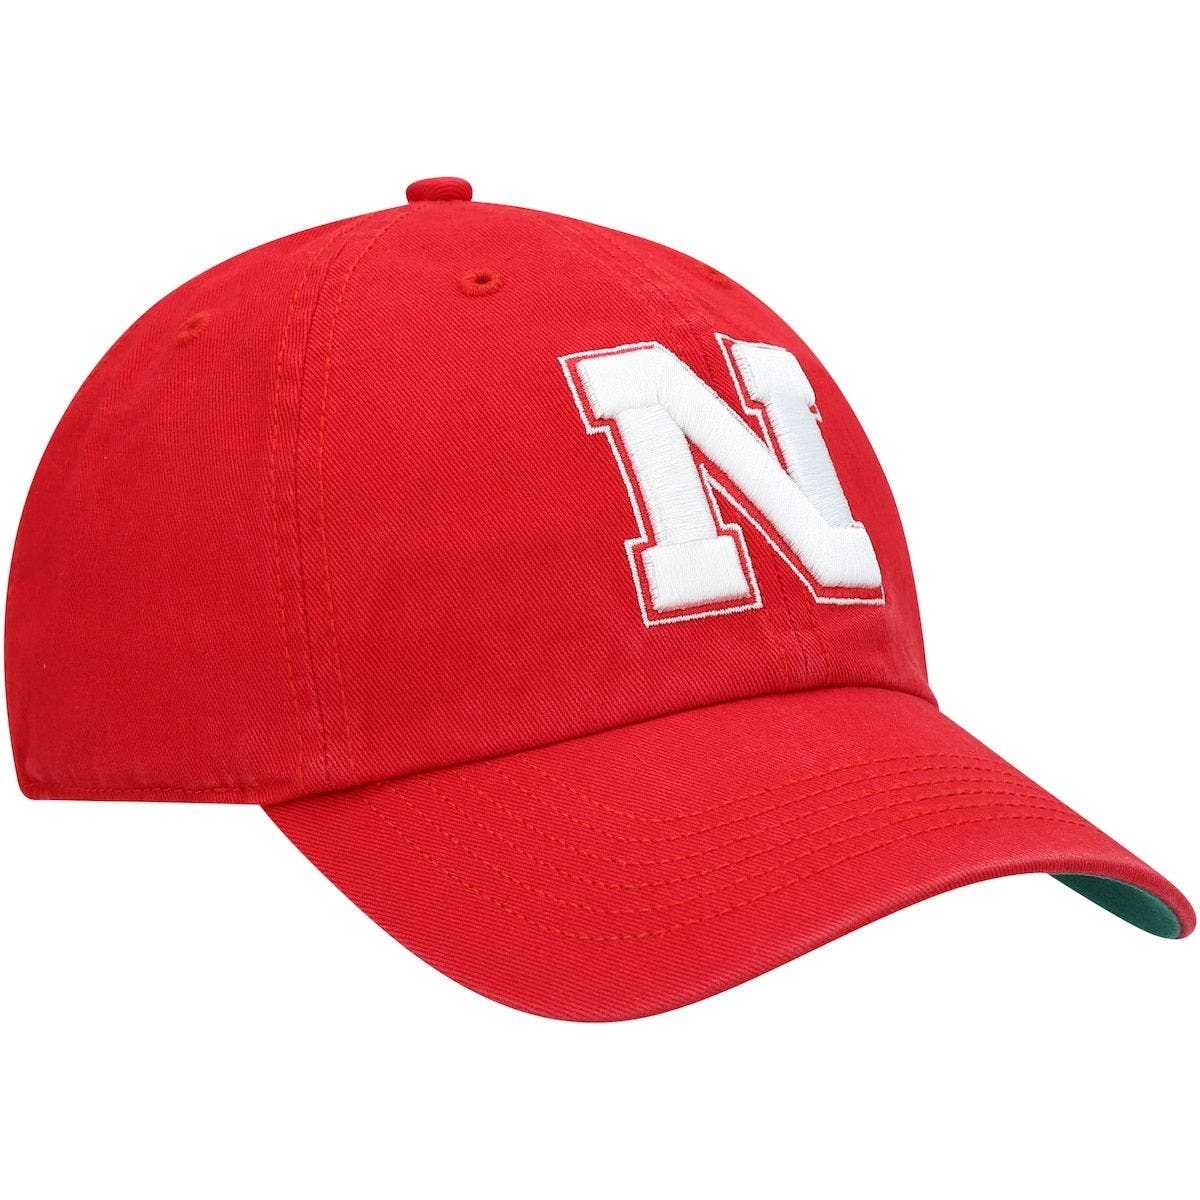 Nebraska Cornhuskers Hat Cap  "Red ZH Flexfit Cap by Zephyr NCAA Hats 